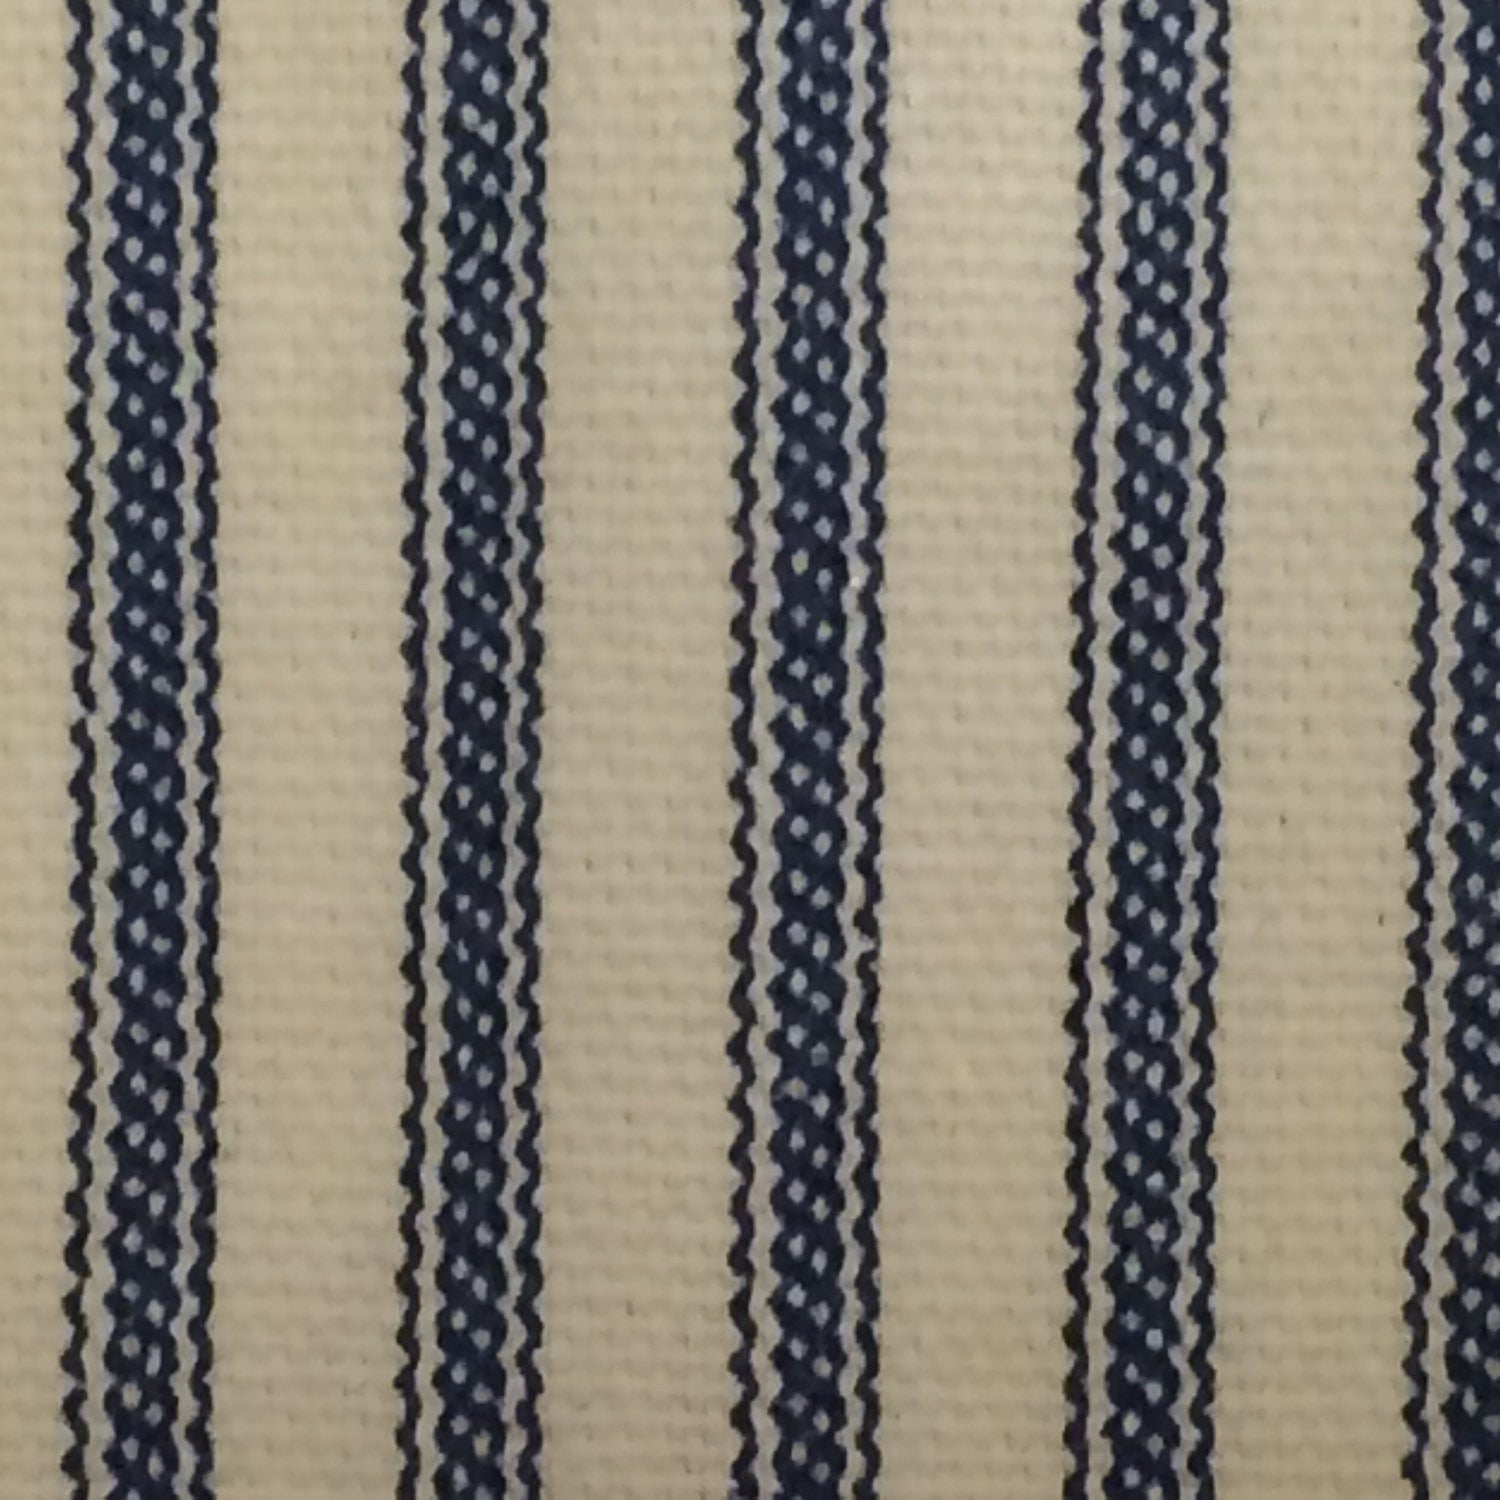 Ruffle Ticking Stripe Shower Curtain Navy Blue